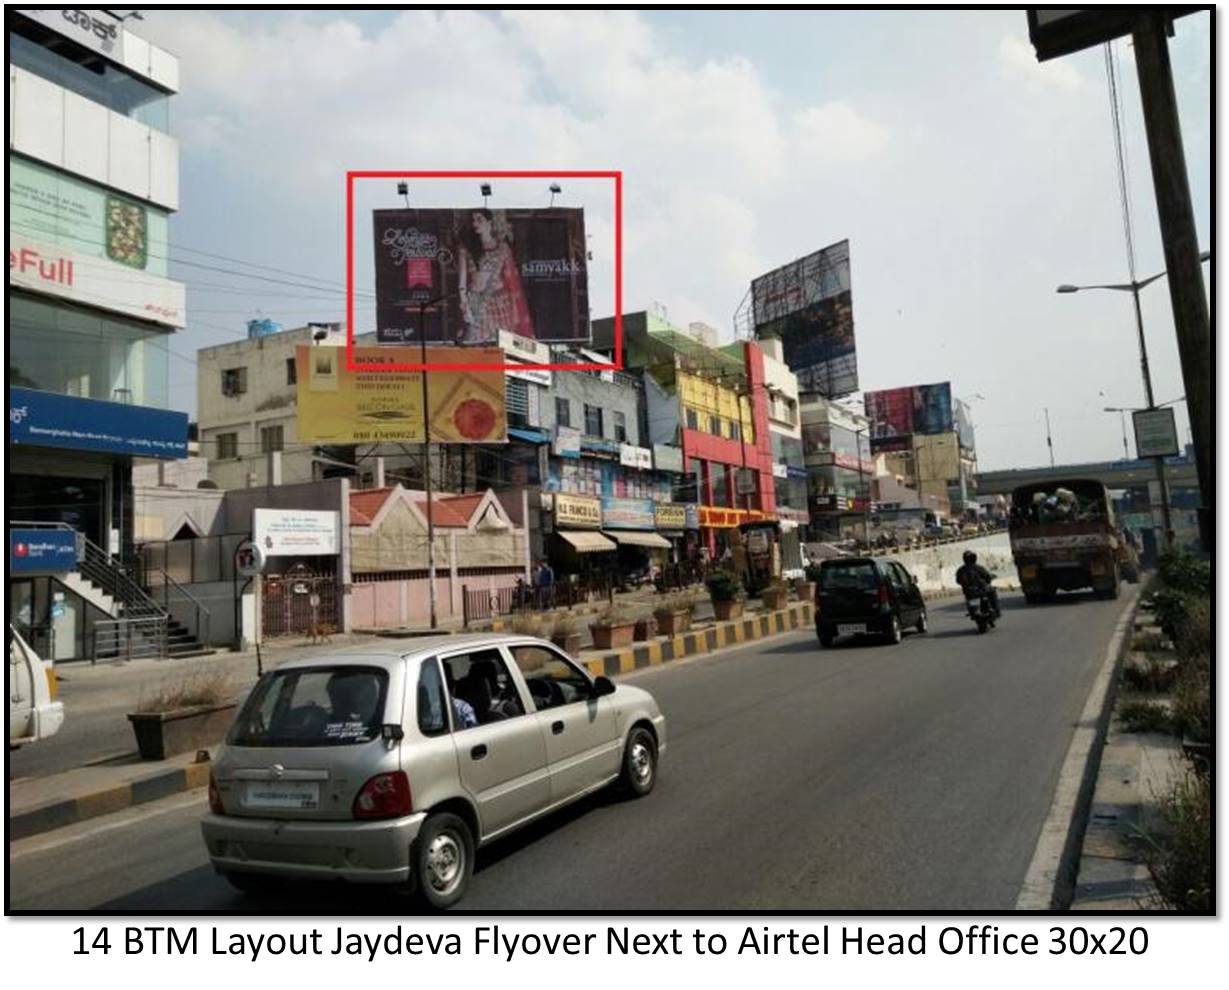 BTM Layout Jaydeva Flyover Next to Airtel Head Office, Bengaluru